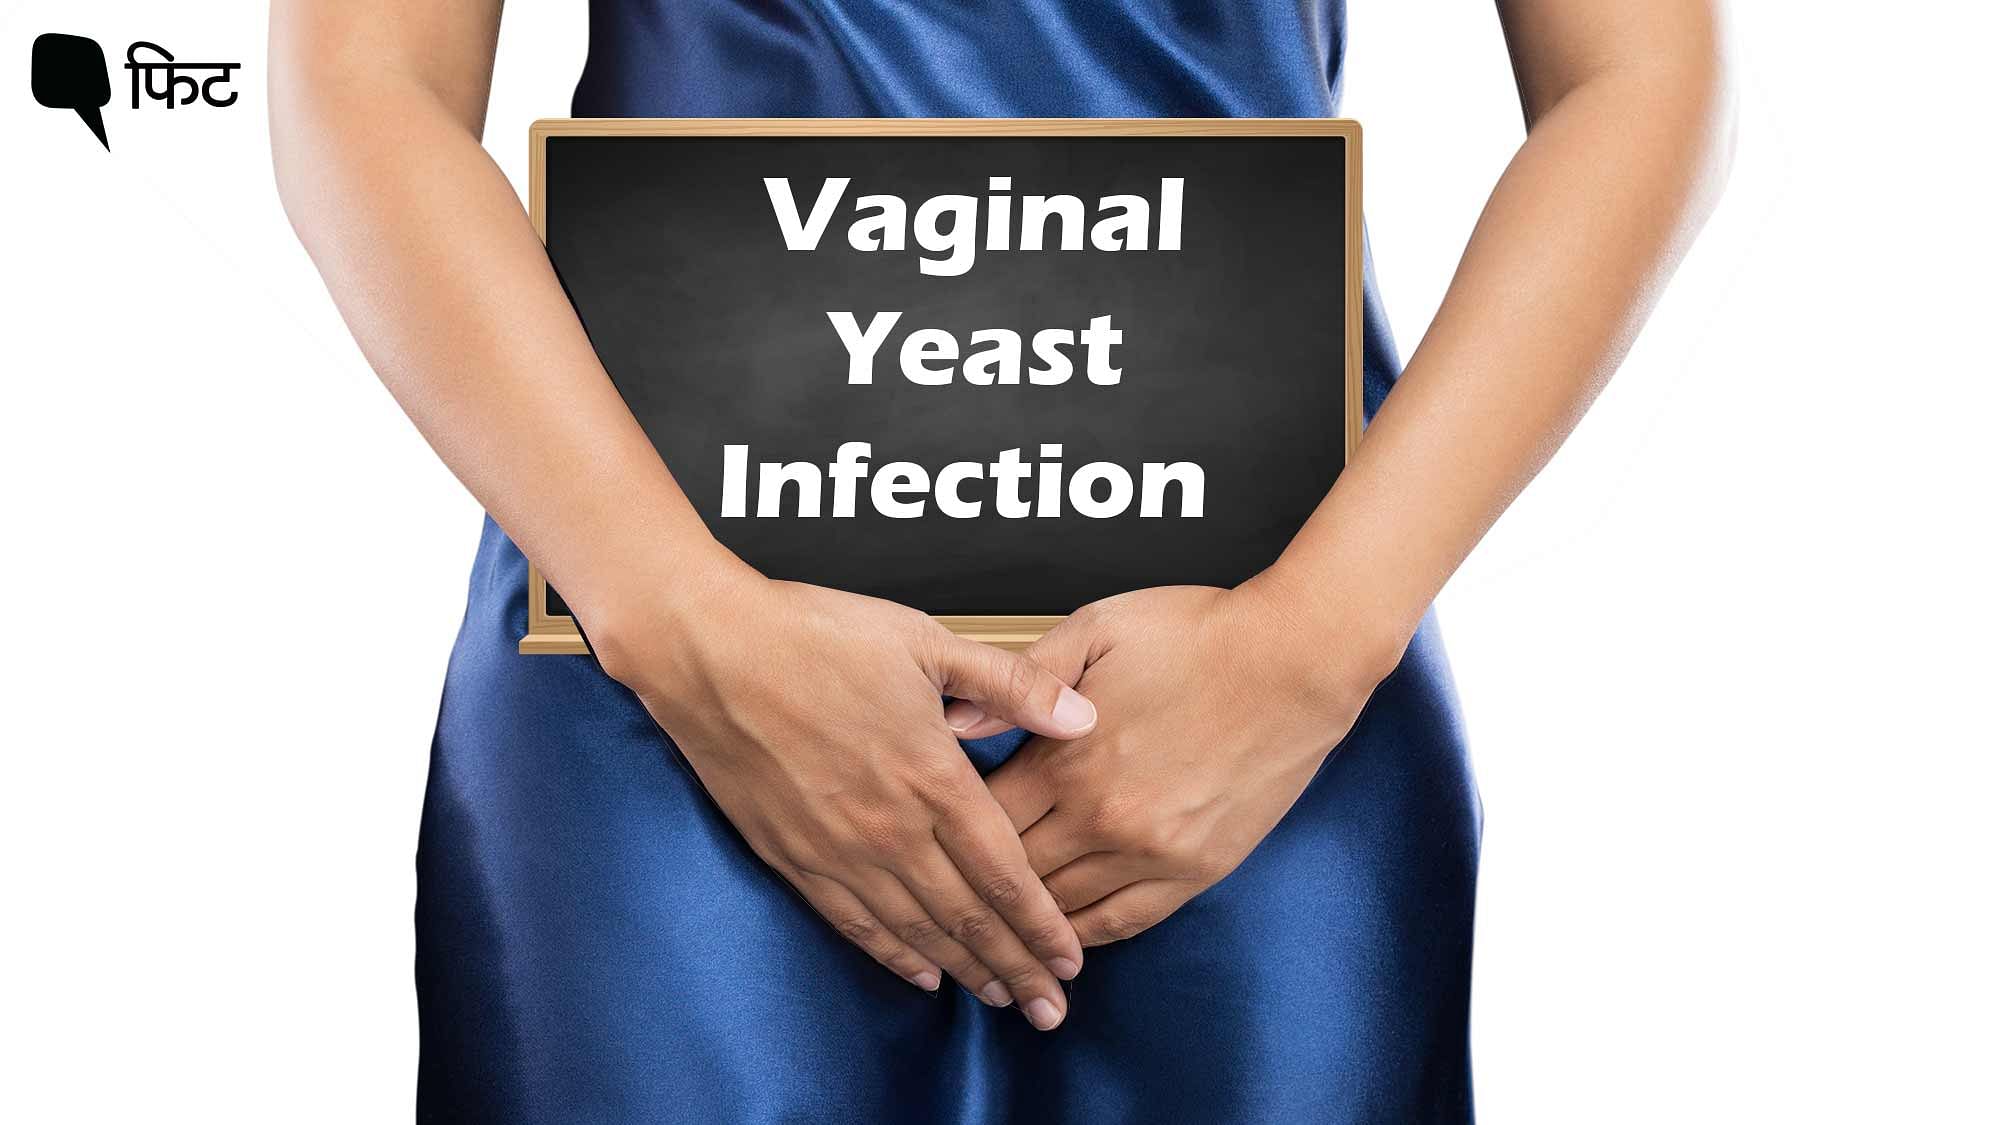 <div class="paragraphs"><p>Vaginal Yeast Infection: वजाइना या योनि में जलन और खुजली है इन्फेक्शन के लक्षण.</p></div>